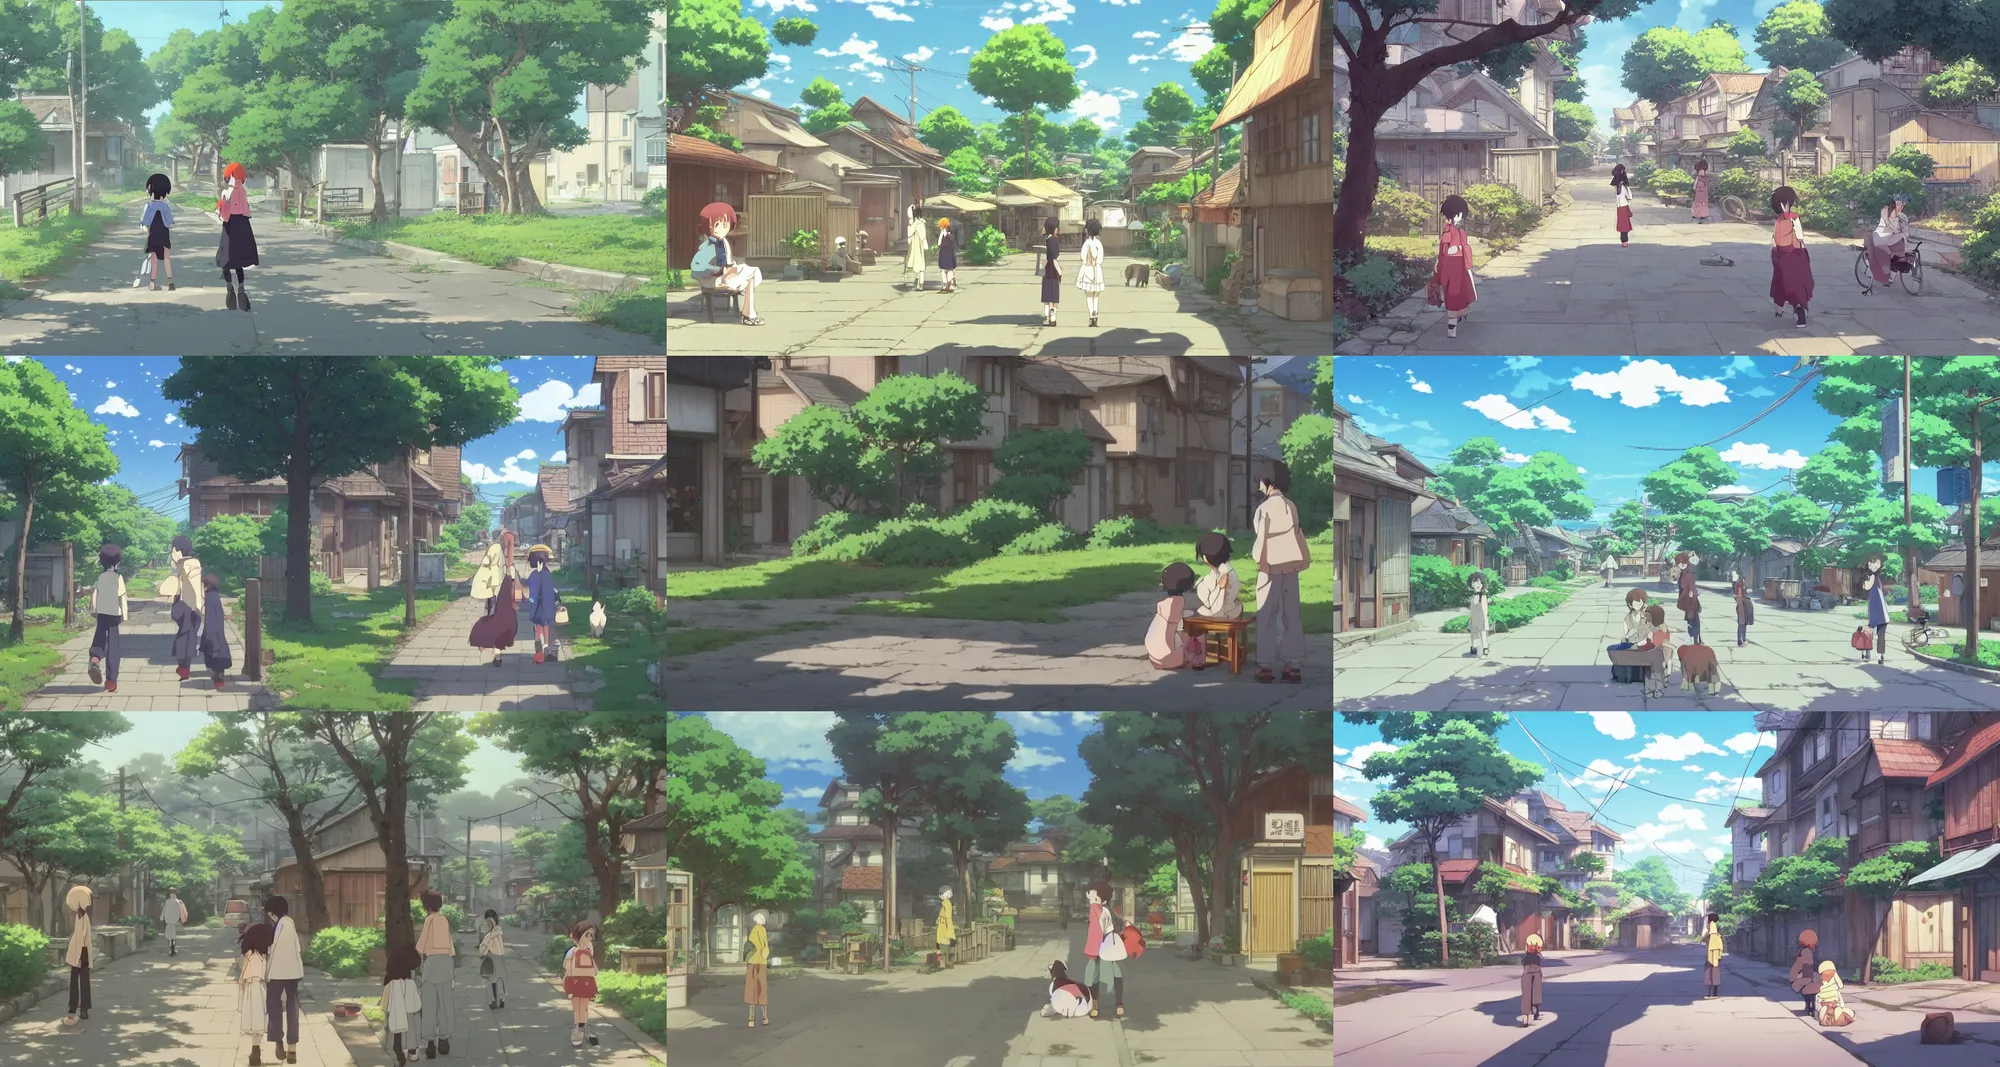 Prompt: beautiful slice of life anime scene of rural street, relaxing, calm, cozy, peaceful, by mamoru hosoda, hayao miyazaki, makoto shinkai